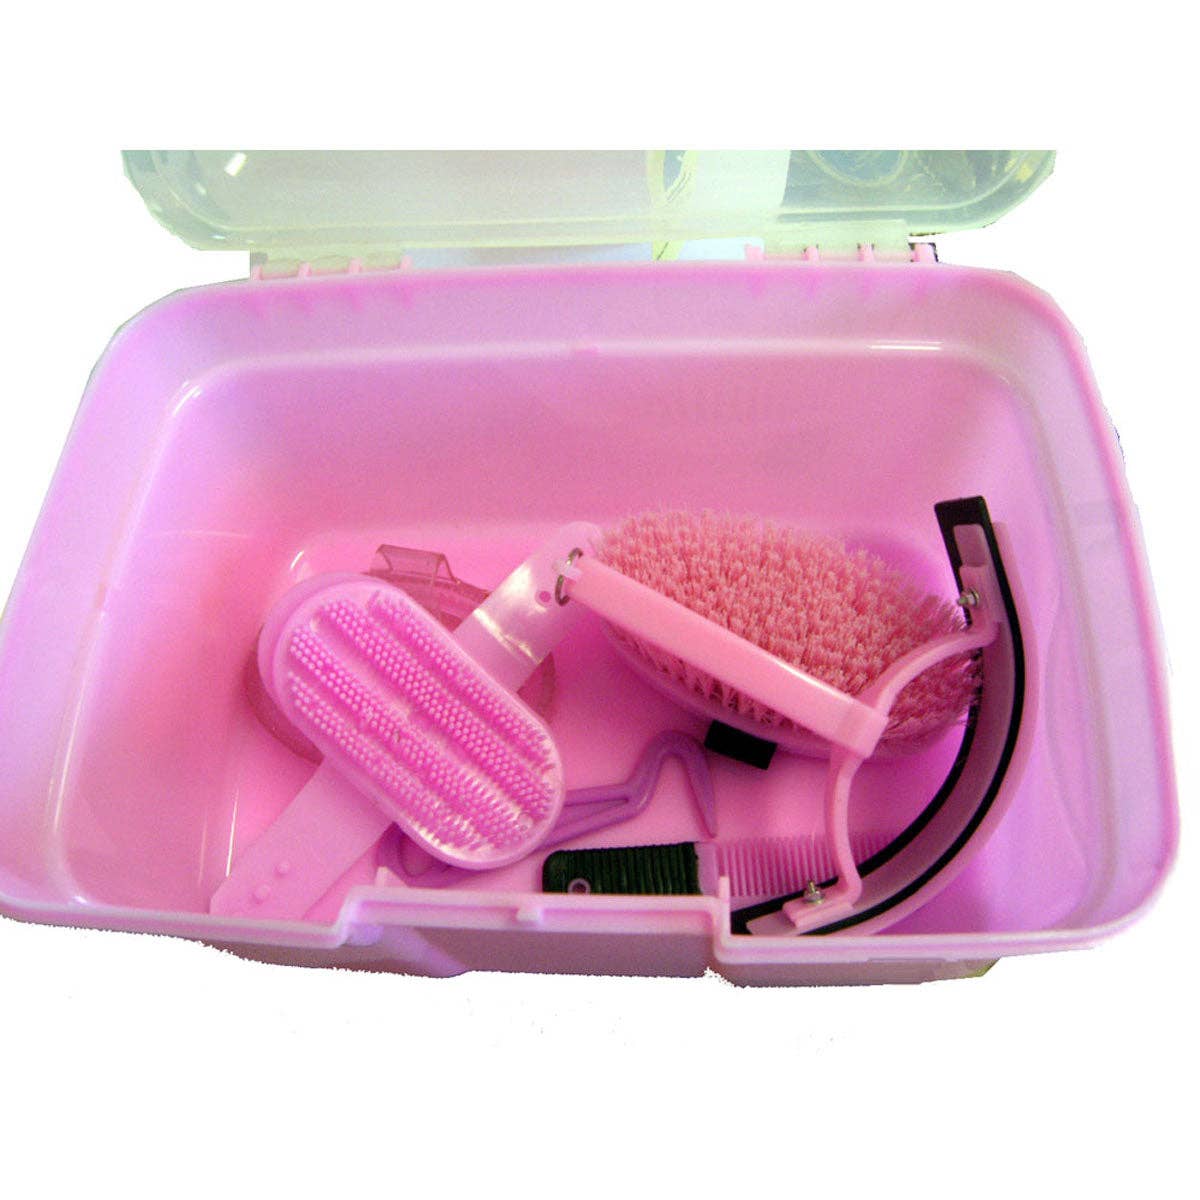 Grooming Tack Box with Tools - Pink